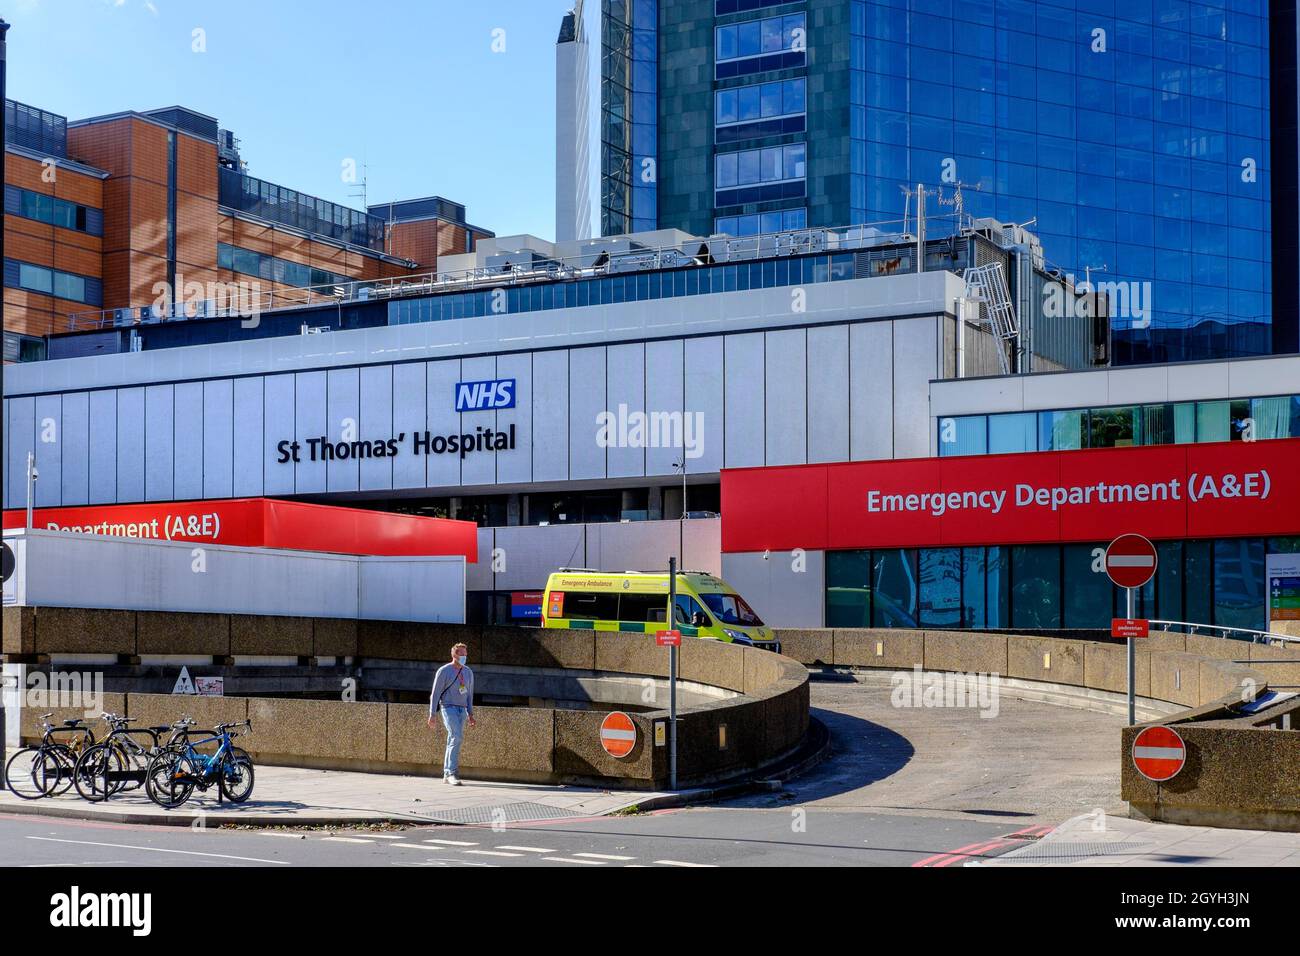 Eingang zur A&E-Abteilung des St. Thomas' Hospital, London. Stockfoto